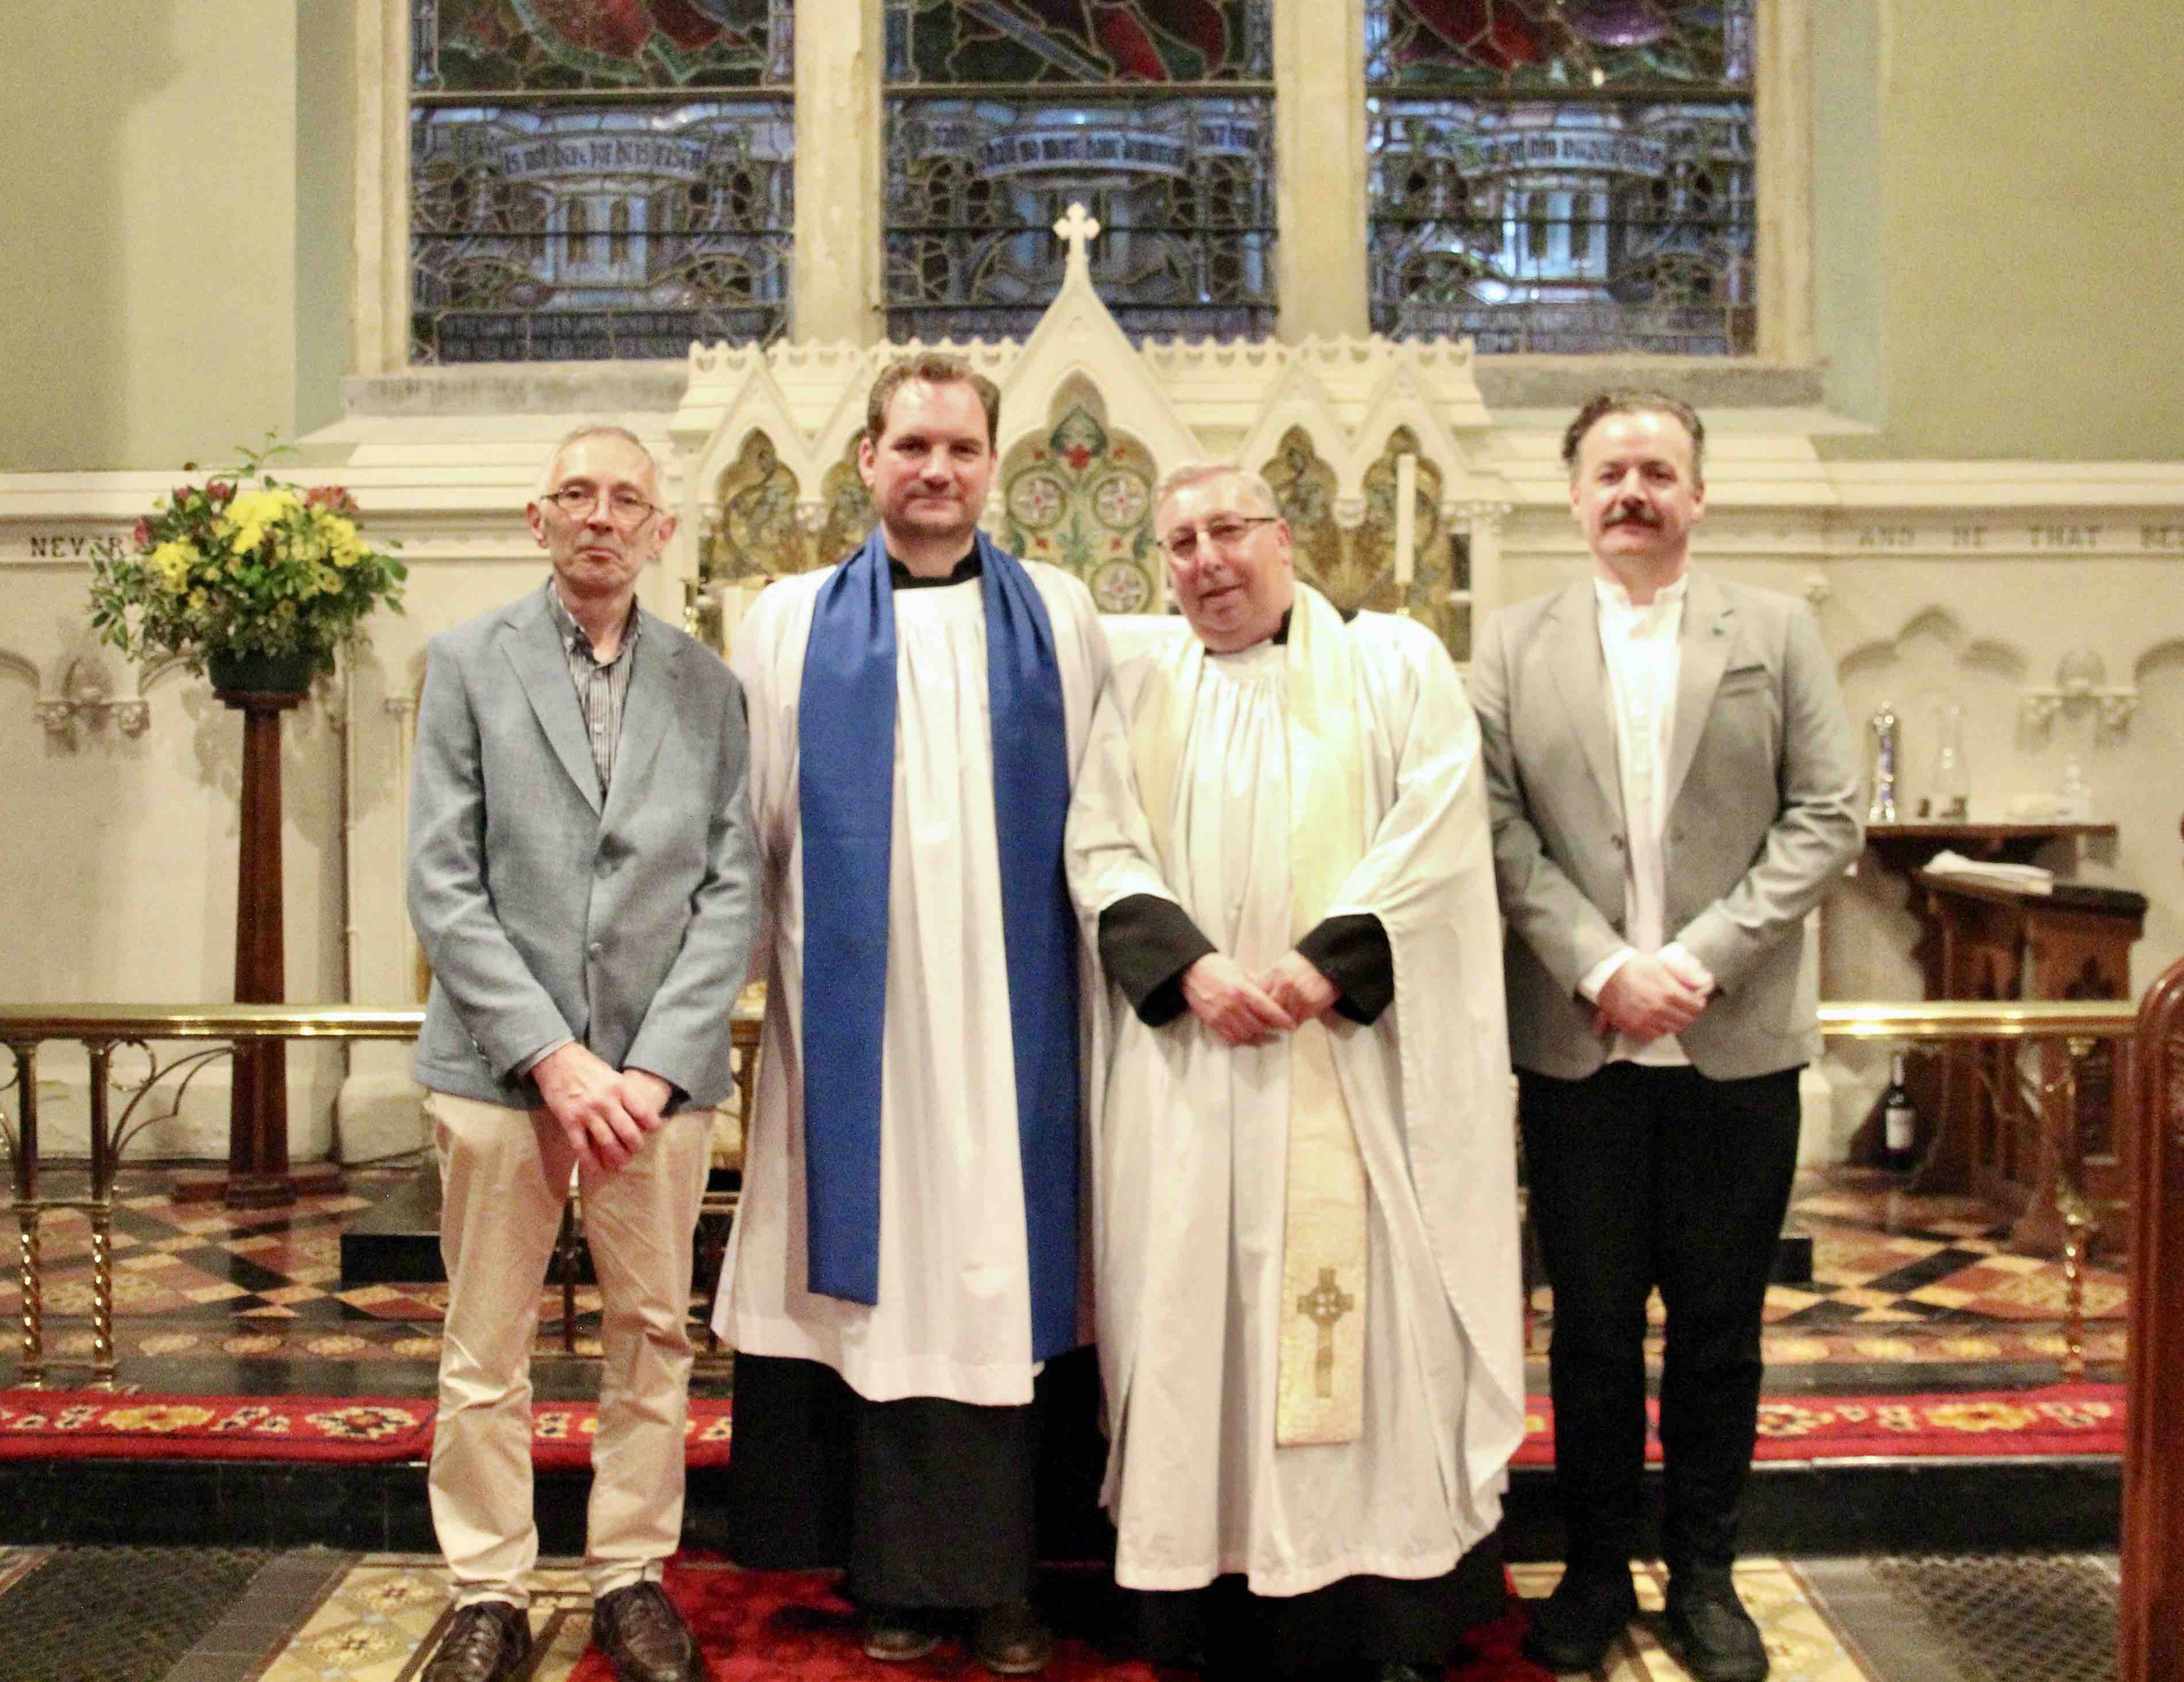 The Revd Steve Brunn, Lay Reader Daniel Stanford and Church Wardens David Maybury and Brian Lee.